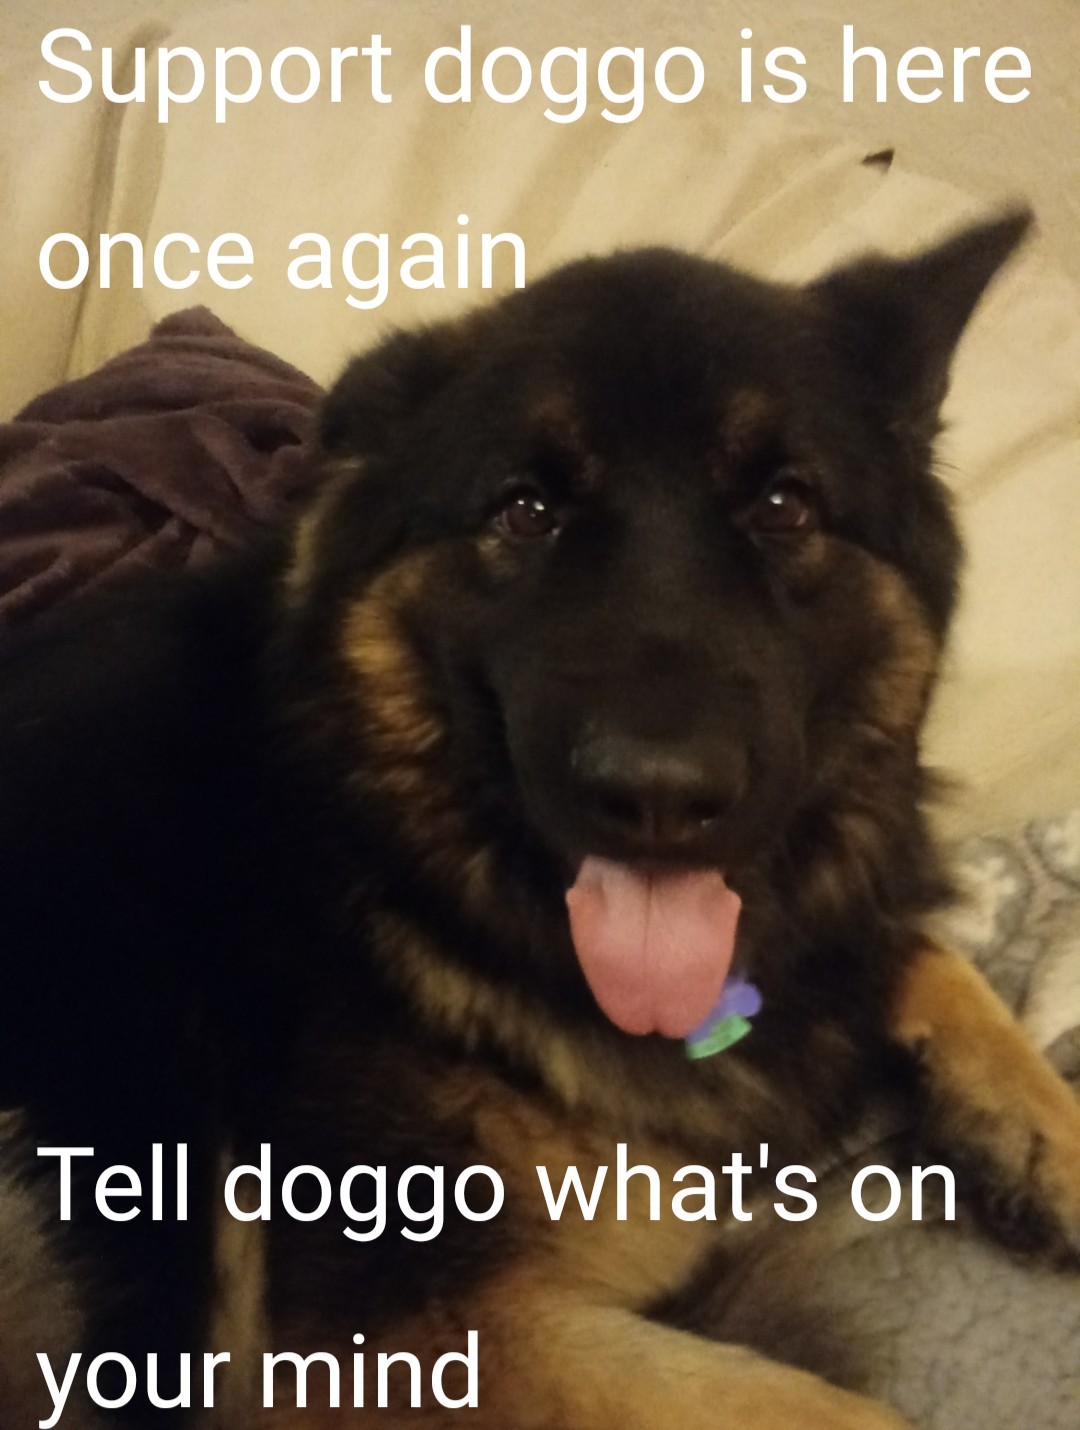 Doggo is here to listen - meme